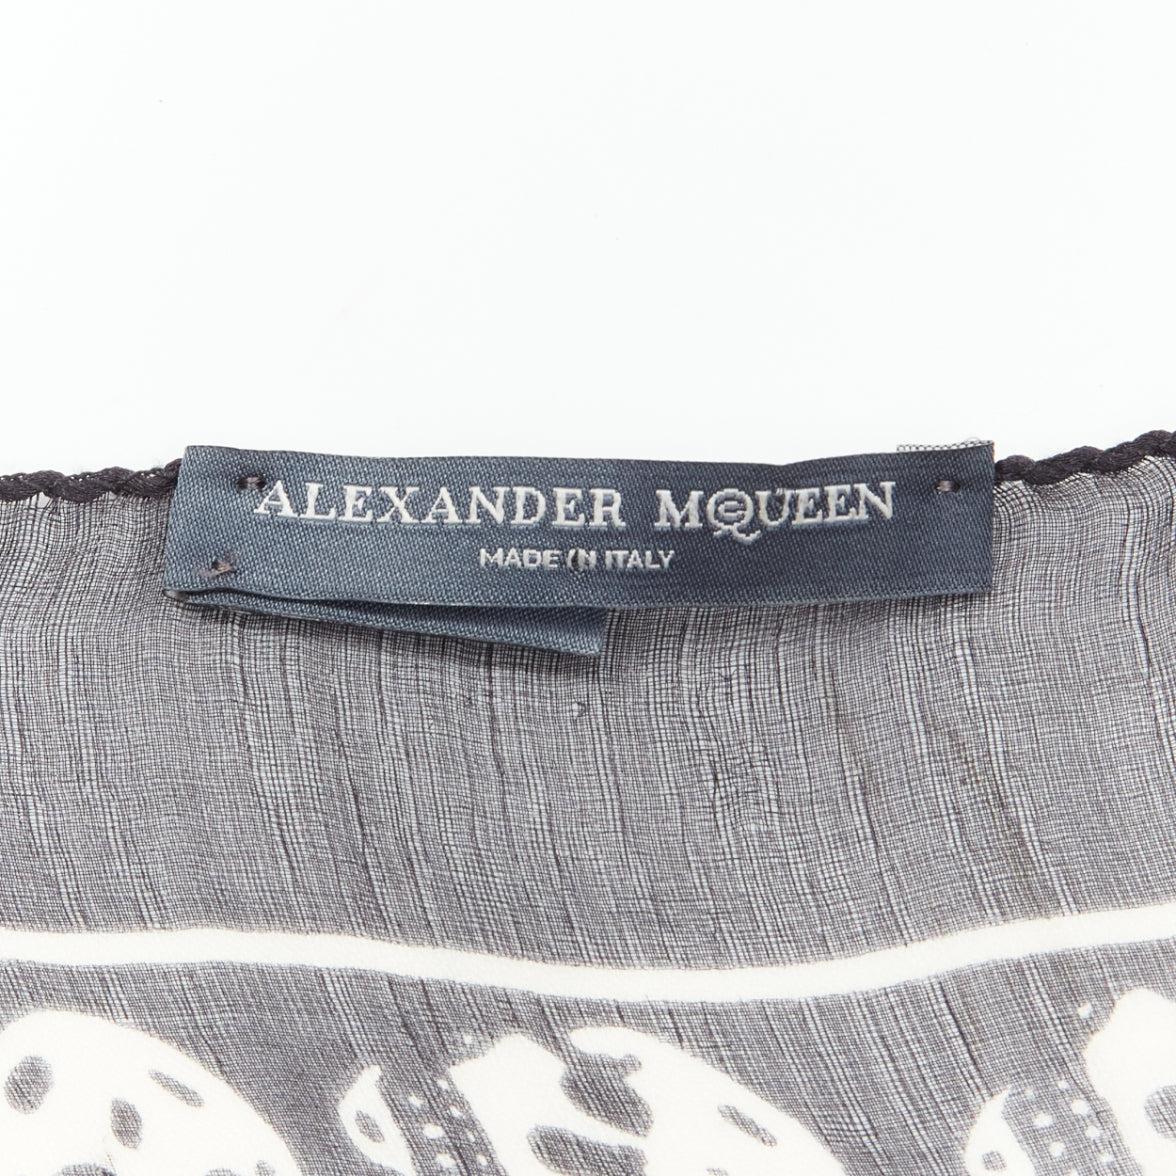 ALEXANDER MCQUEEN black white skull logo print 100% silk scarf For Sale 3